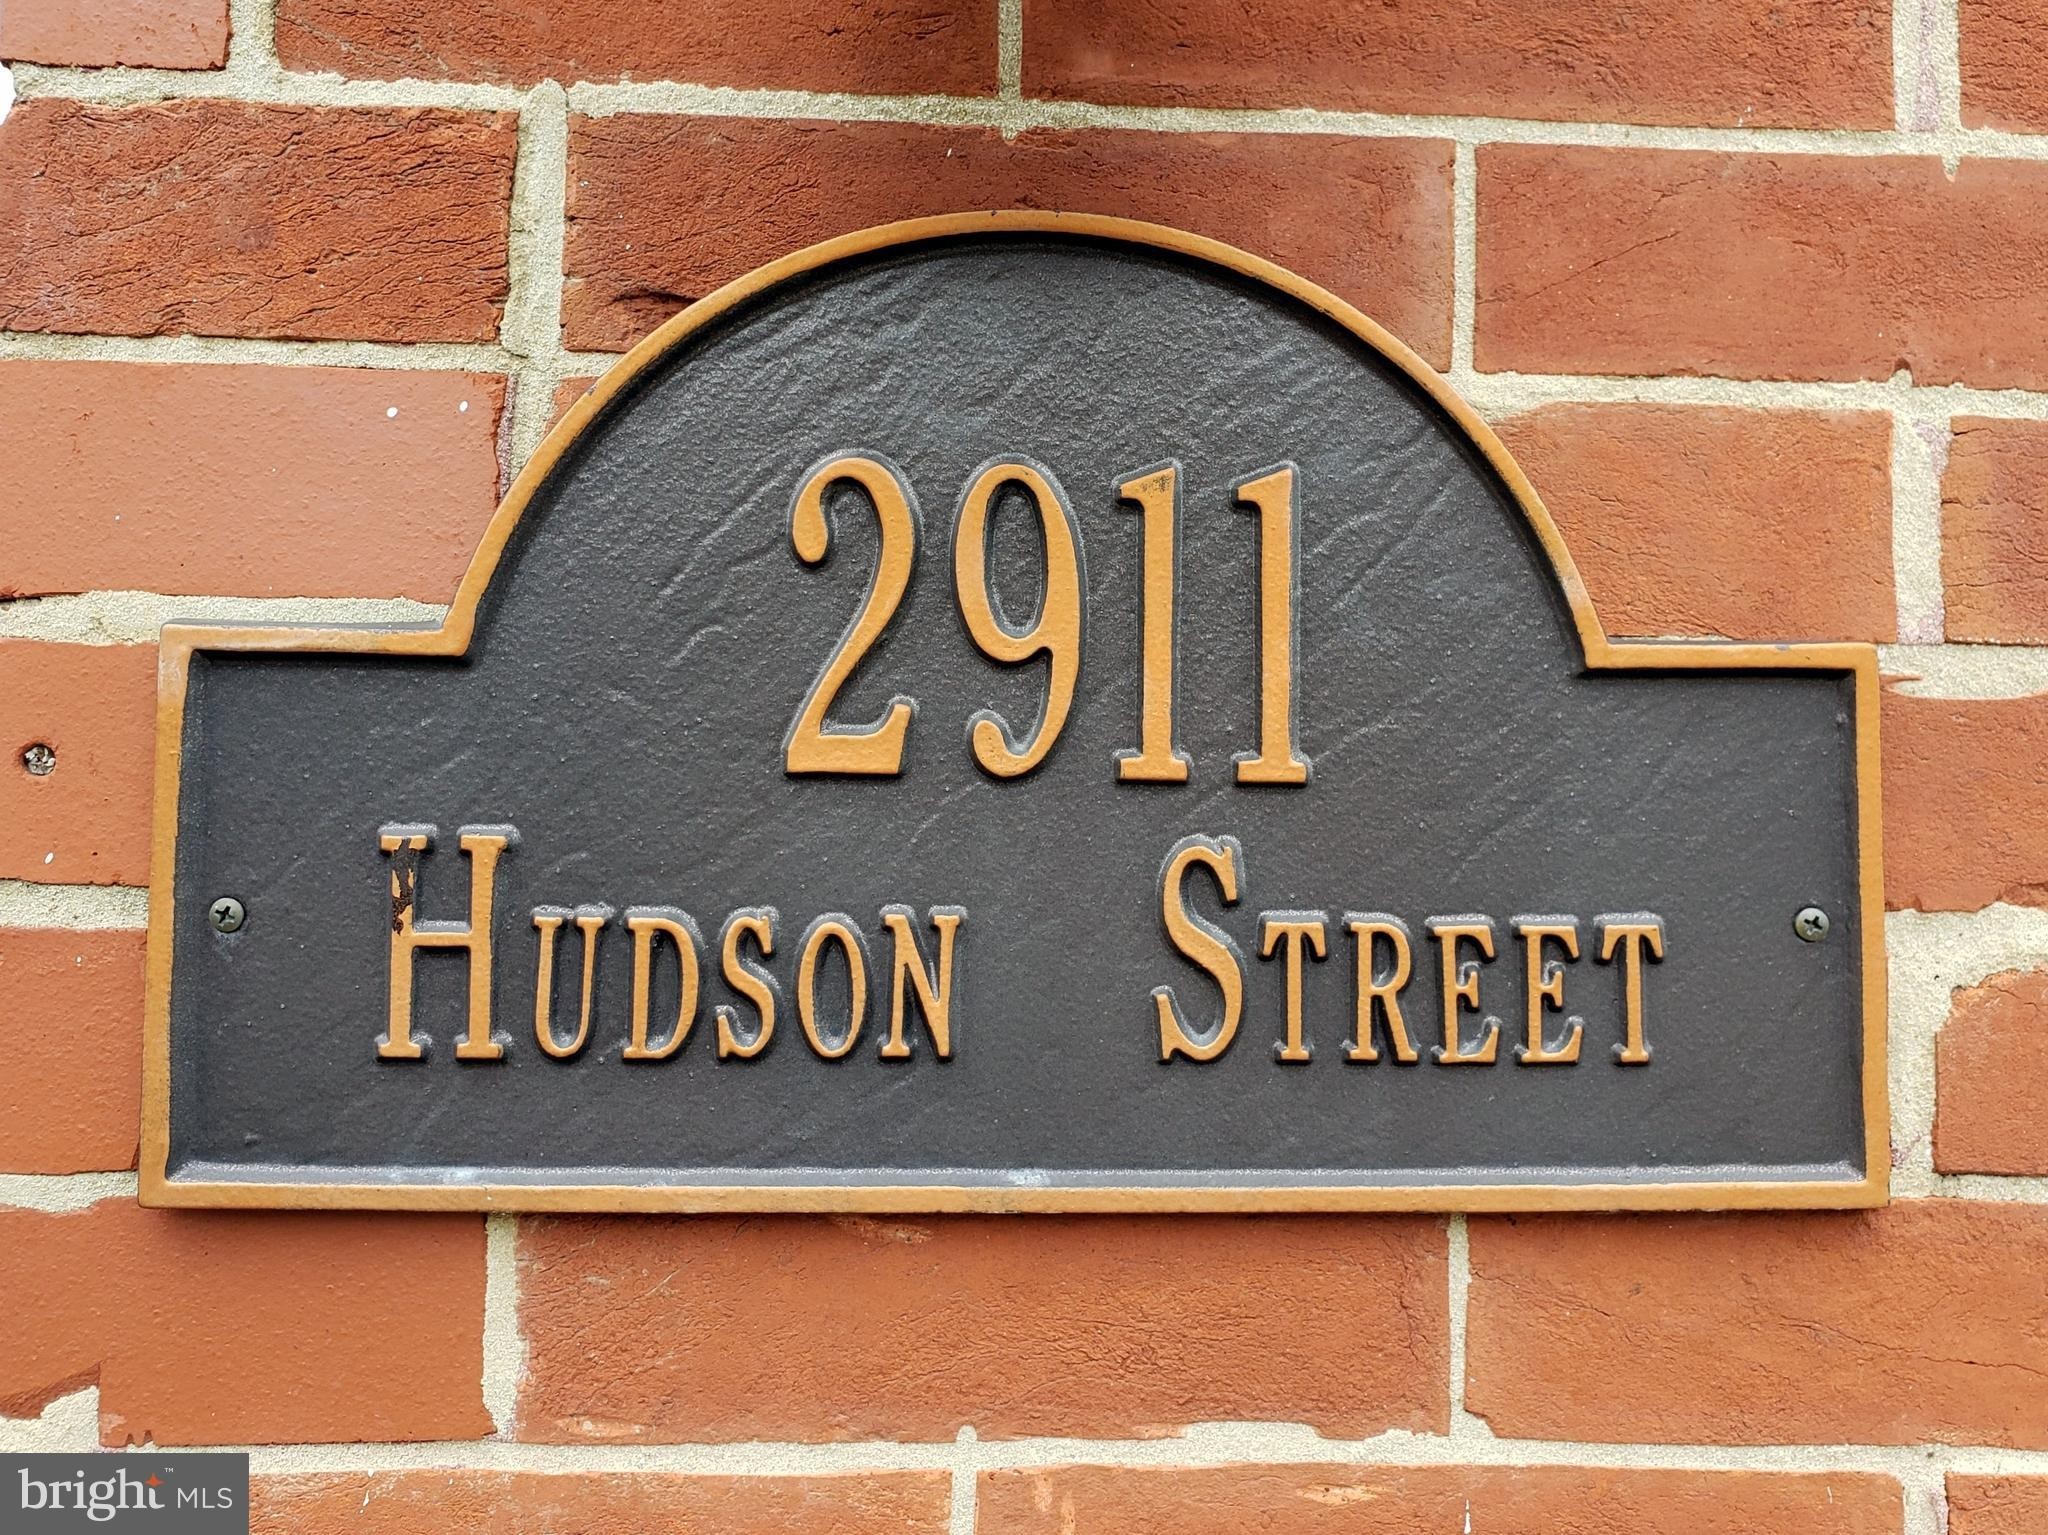 2. 2911 Hudson Street